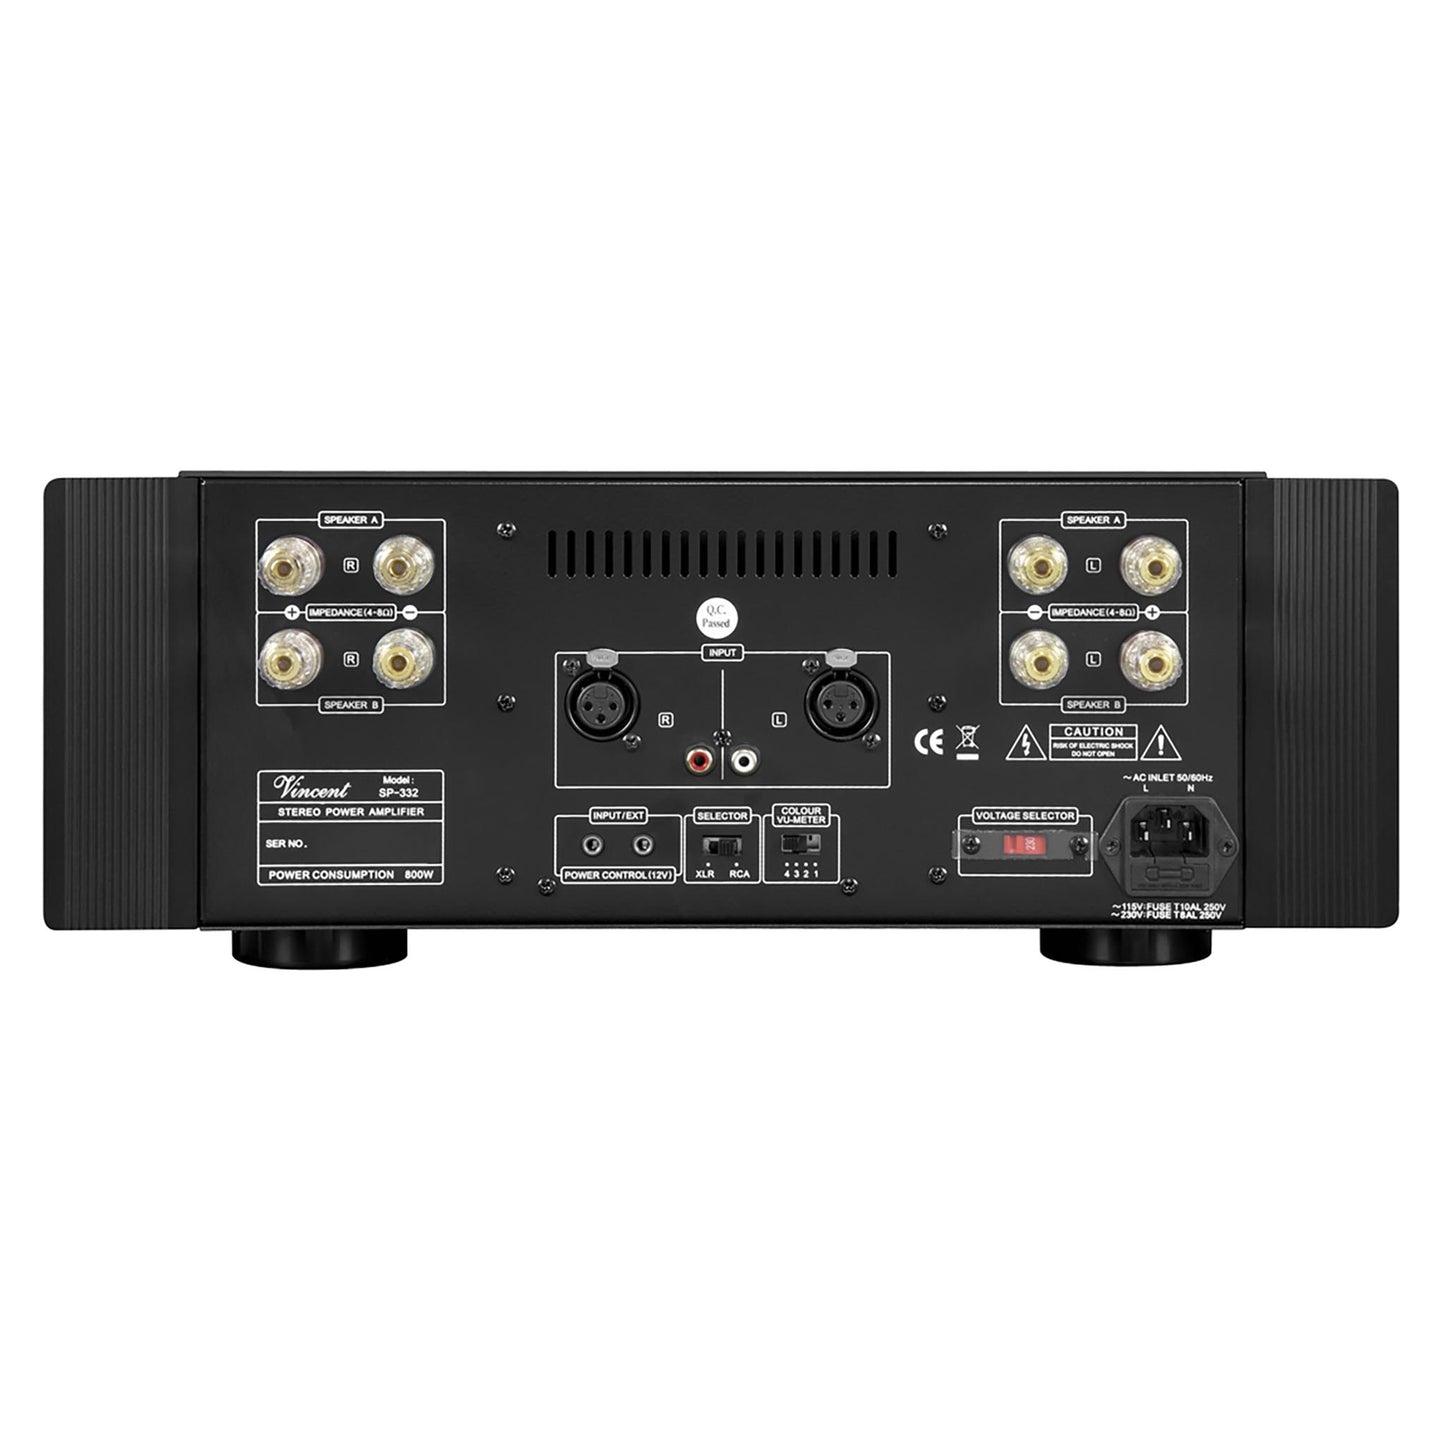 Vincent SP-332 Hybrid Stereo Power Amplifier